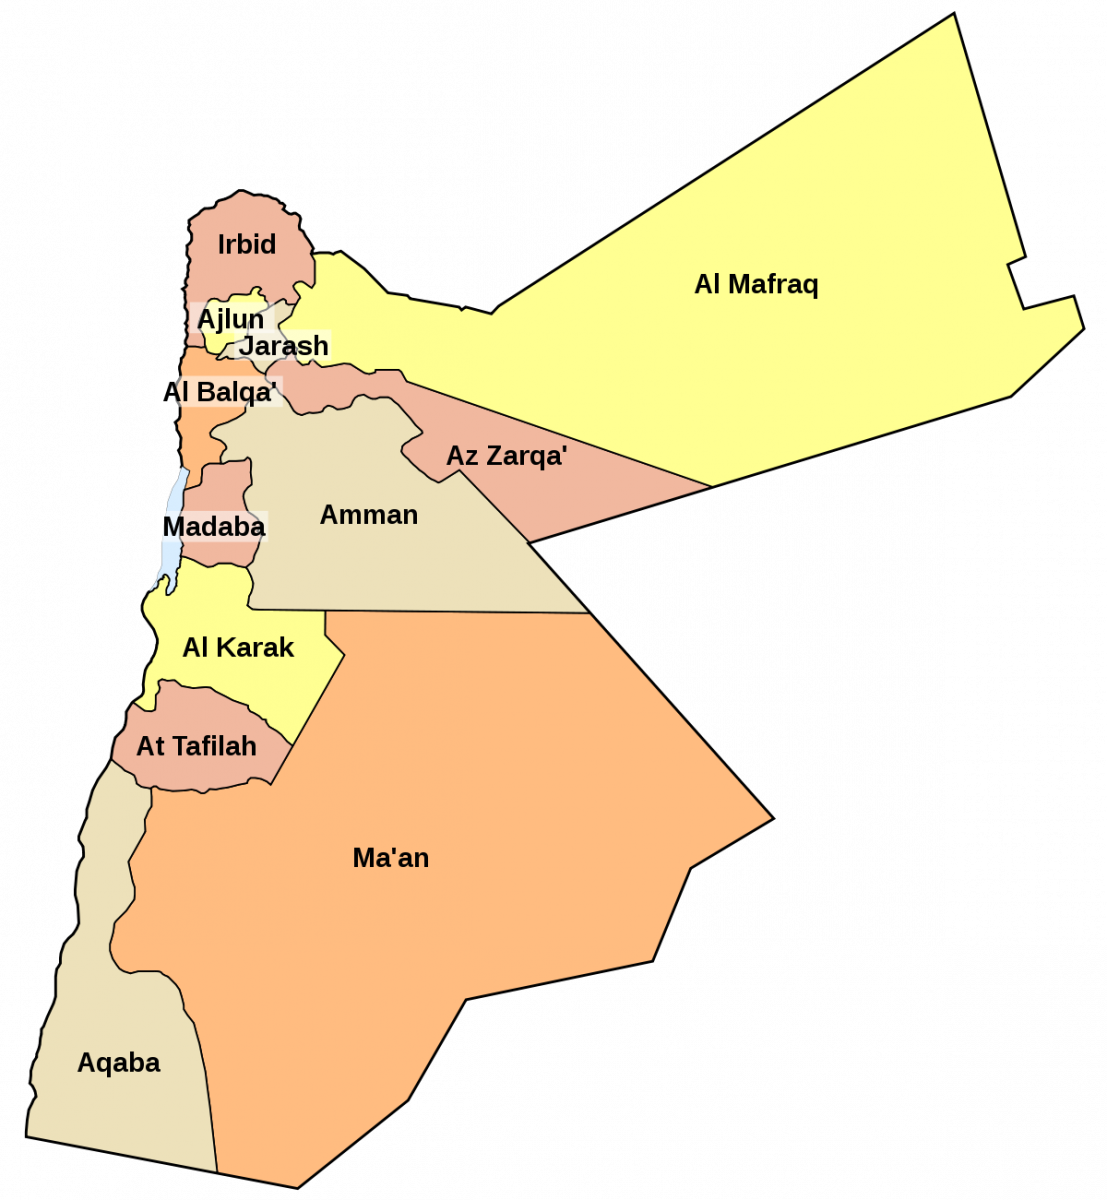 Jordan's provinces